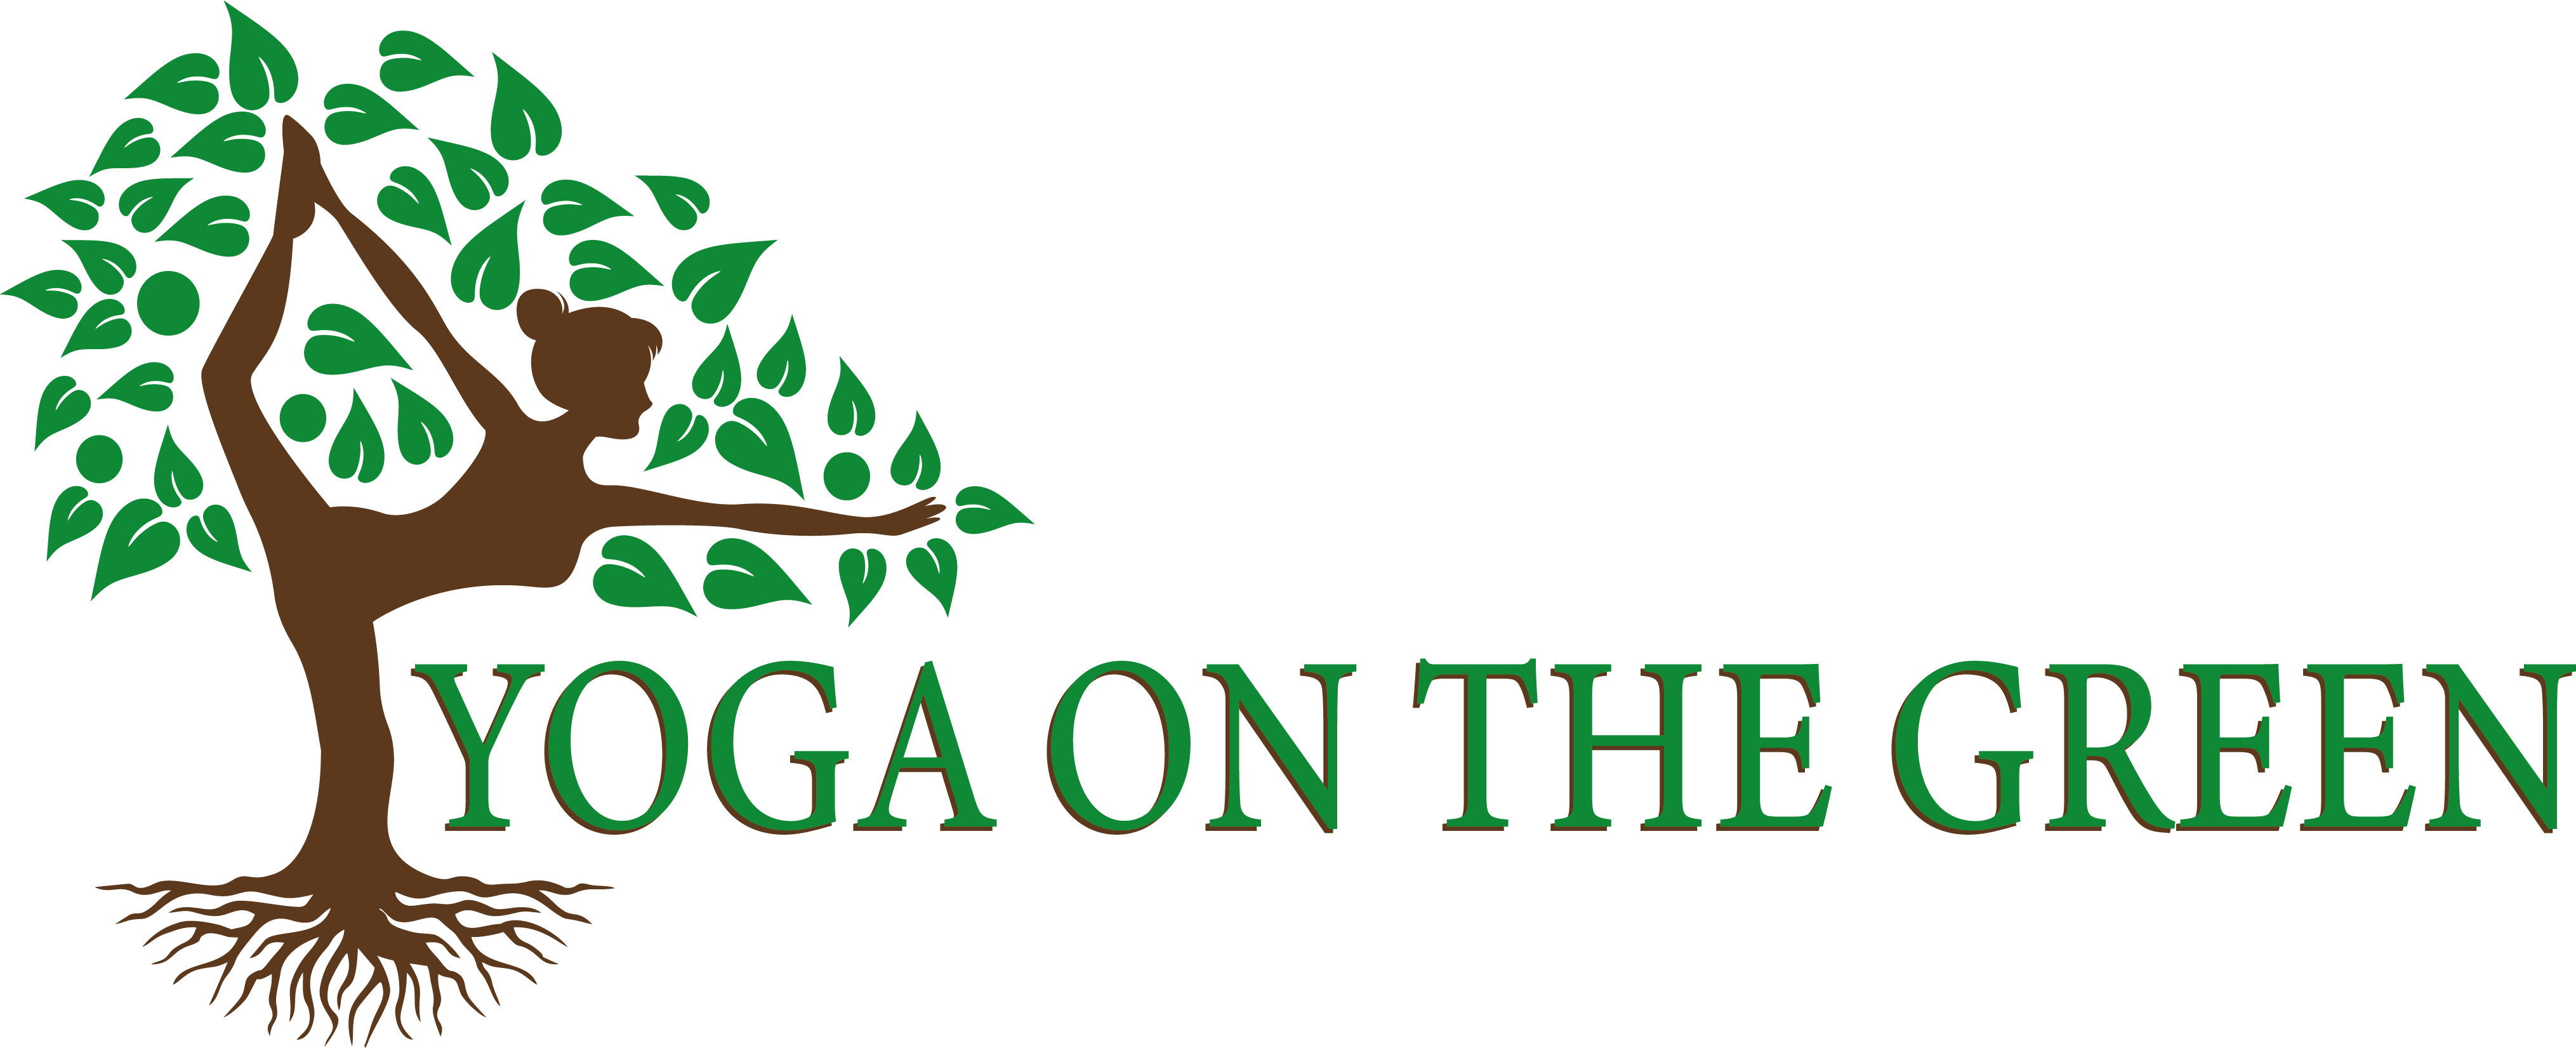 https://www.yoga-green.com/wp-content/uploads/2020/09/logo.png